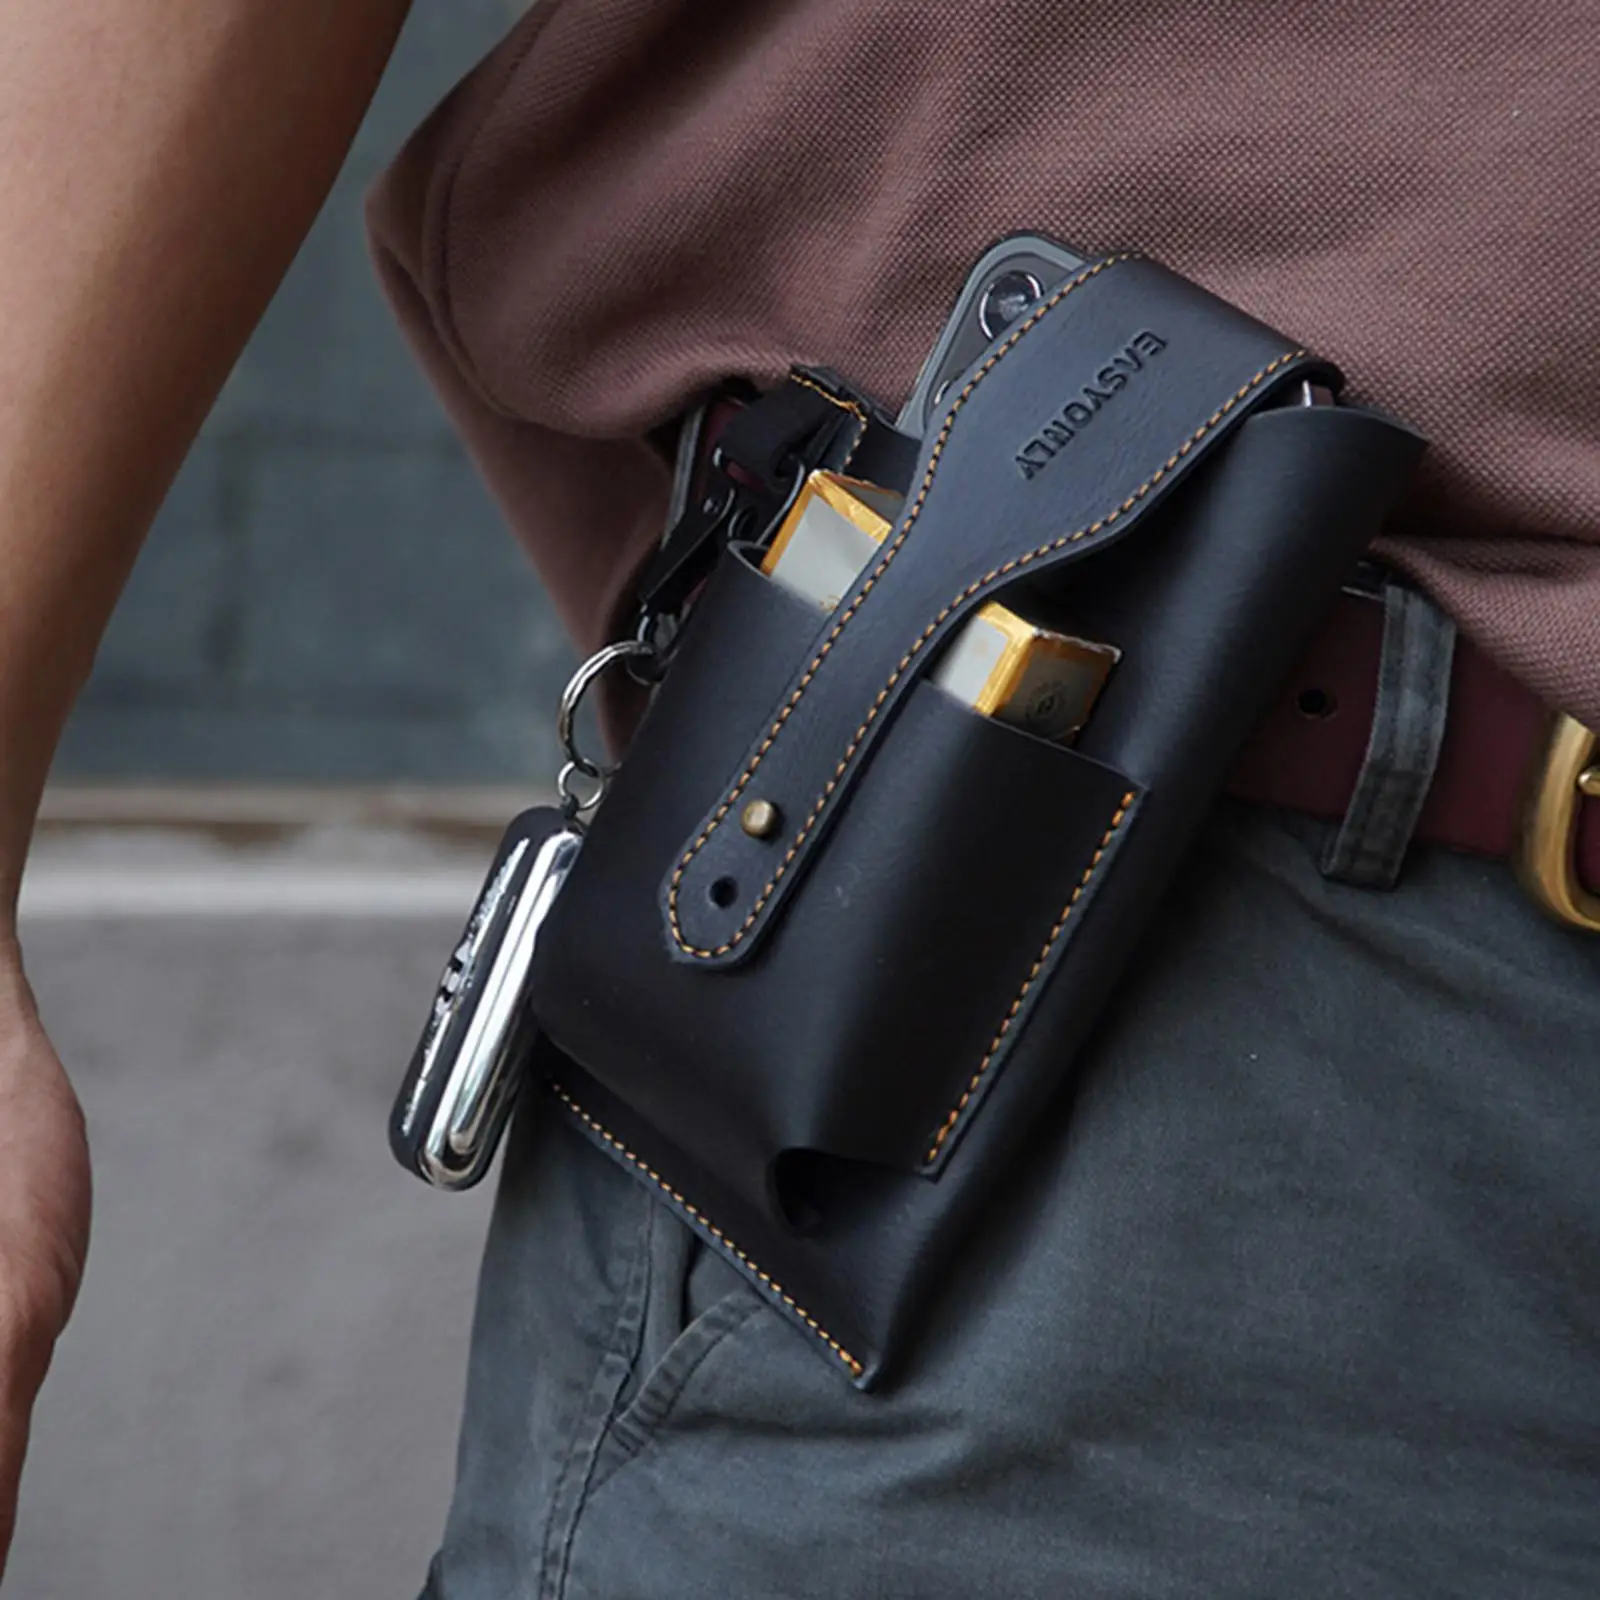 PU Men Waist Bag Multifunction W/ Belt Loop Hip Packs Cell Phone Holster Case Waist Purse Phone Bag with Key Holder 2 Pockets